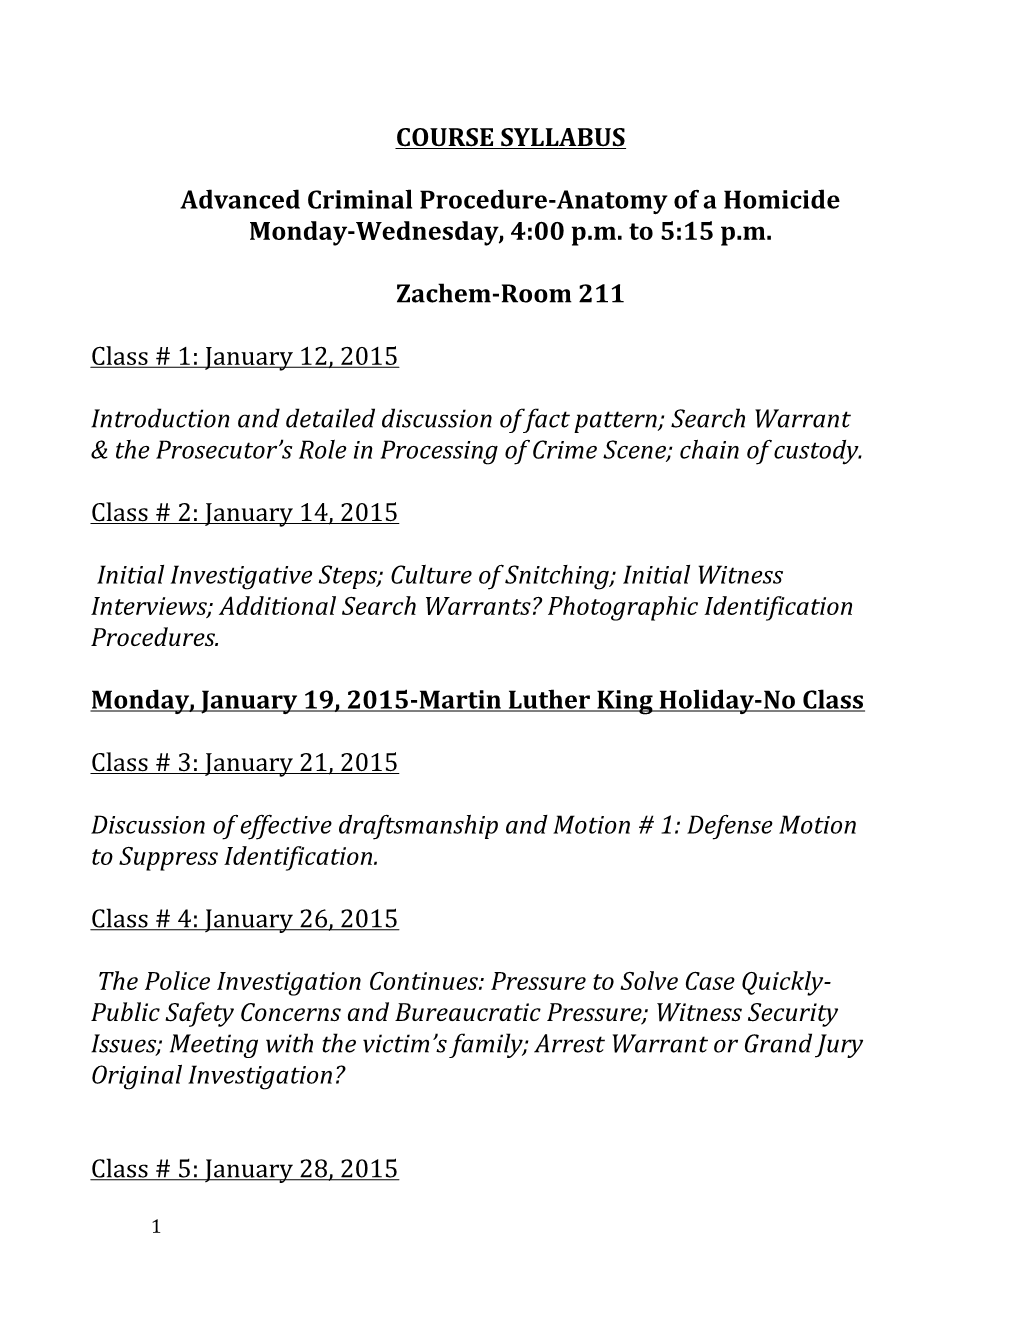 Advanced Criminal Procedure-Anatomy of a Homicide